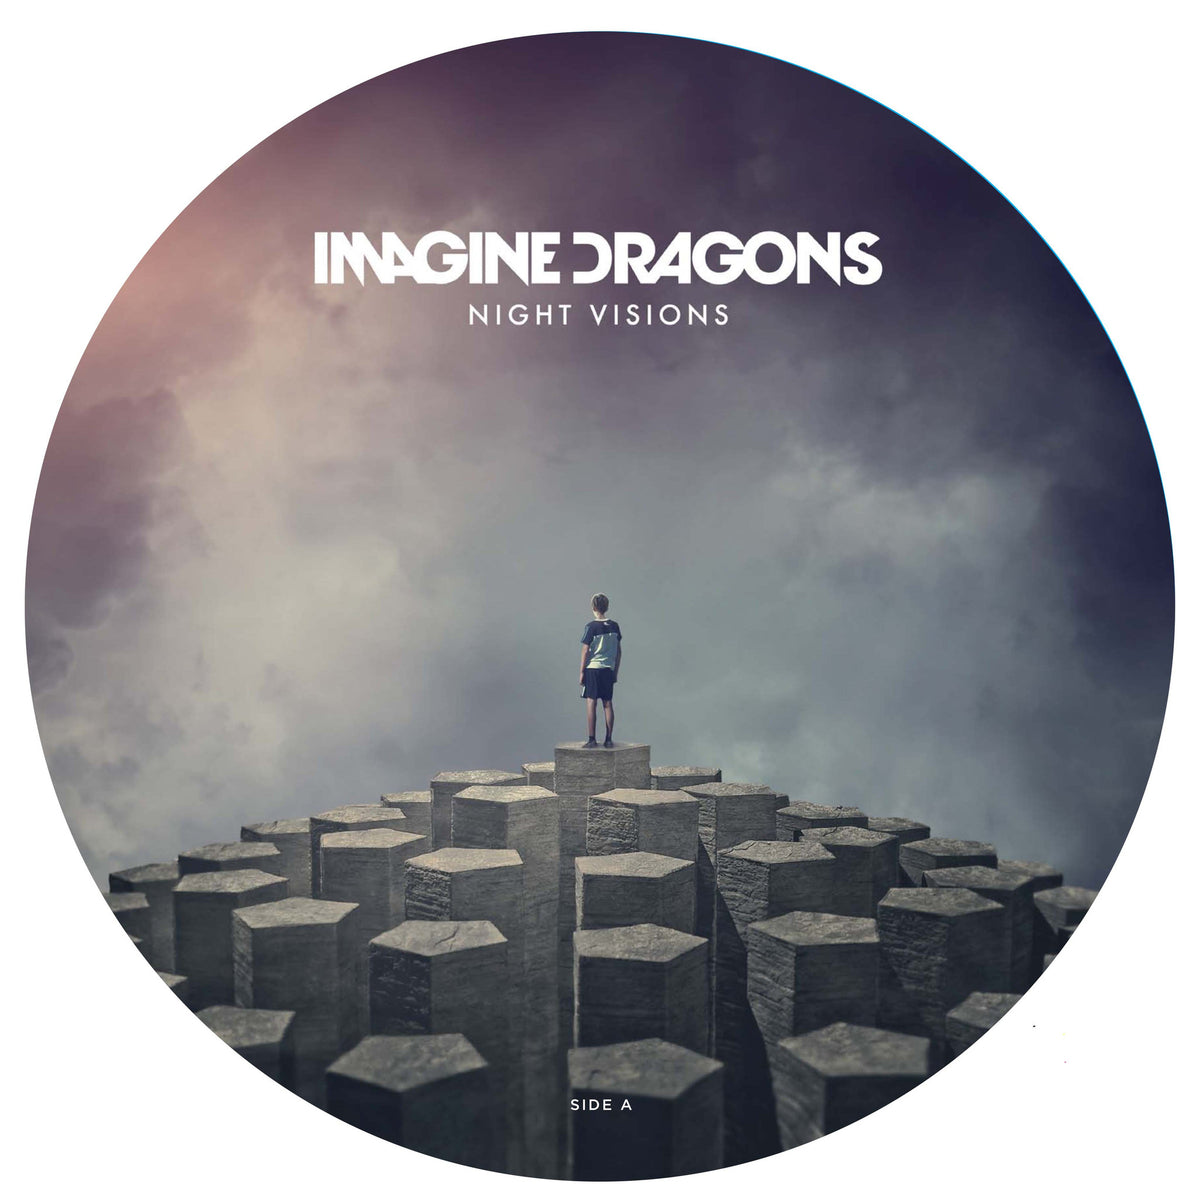 Evolve imagine. Imagine Dragons альбом Night Visions. Imagine Dragons обложки. Обложка альбома Night Visions imagine Dragons. Imagine Dragons 2013.